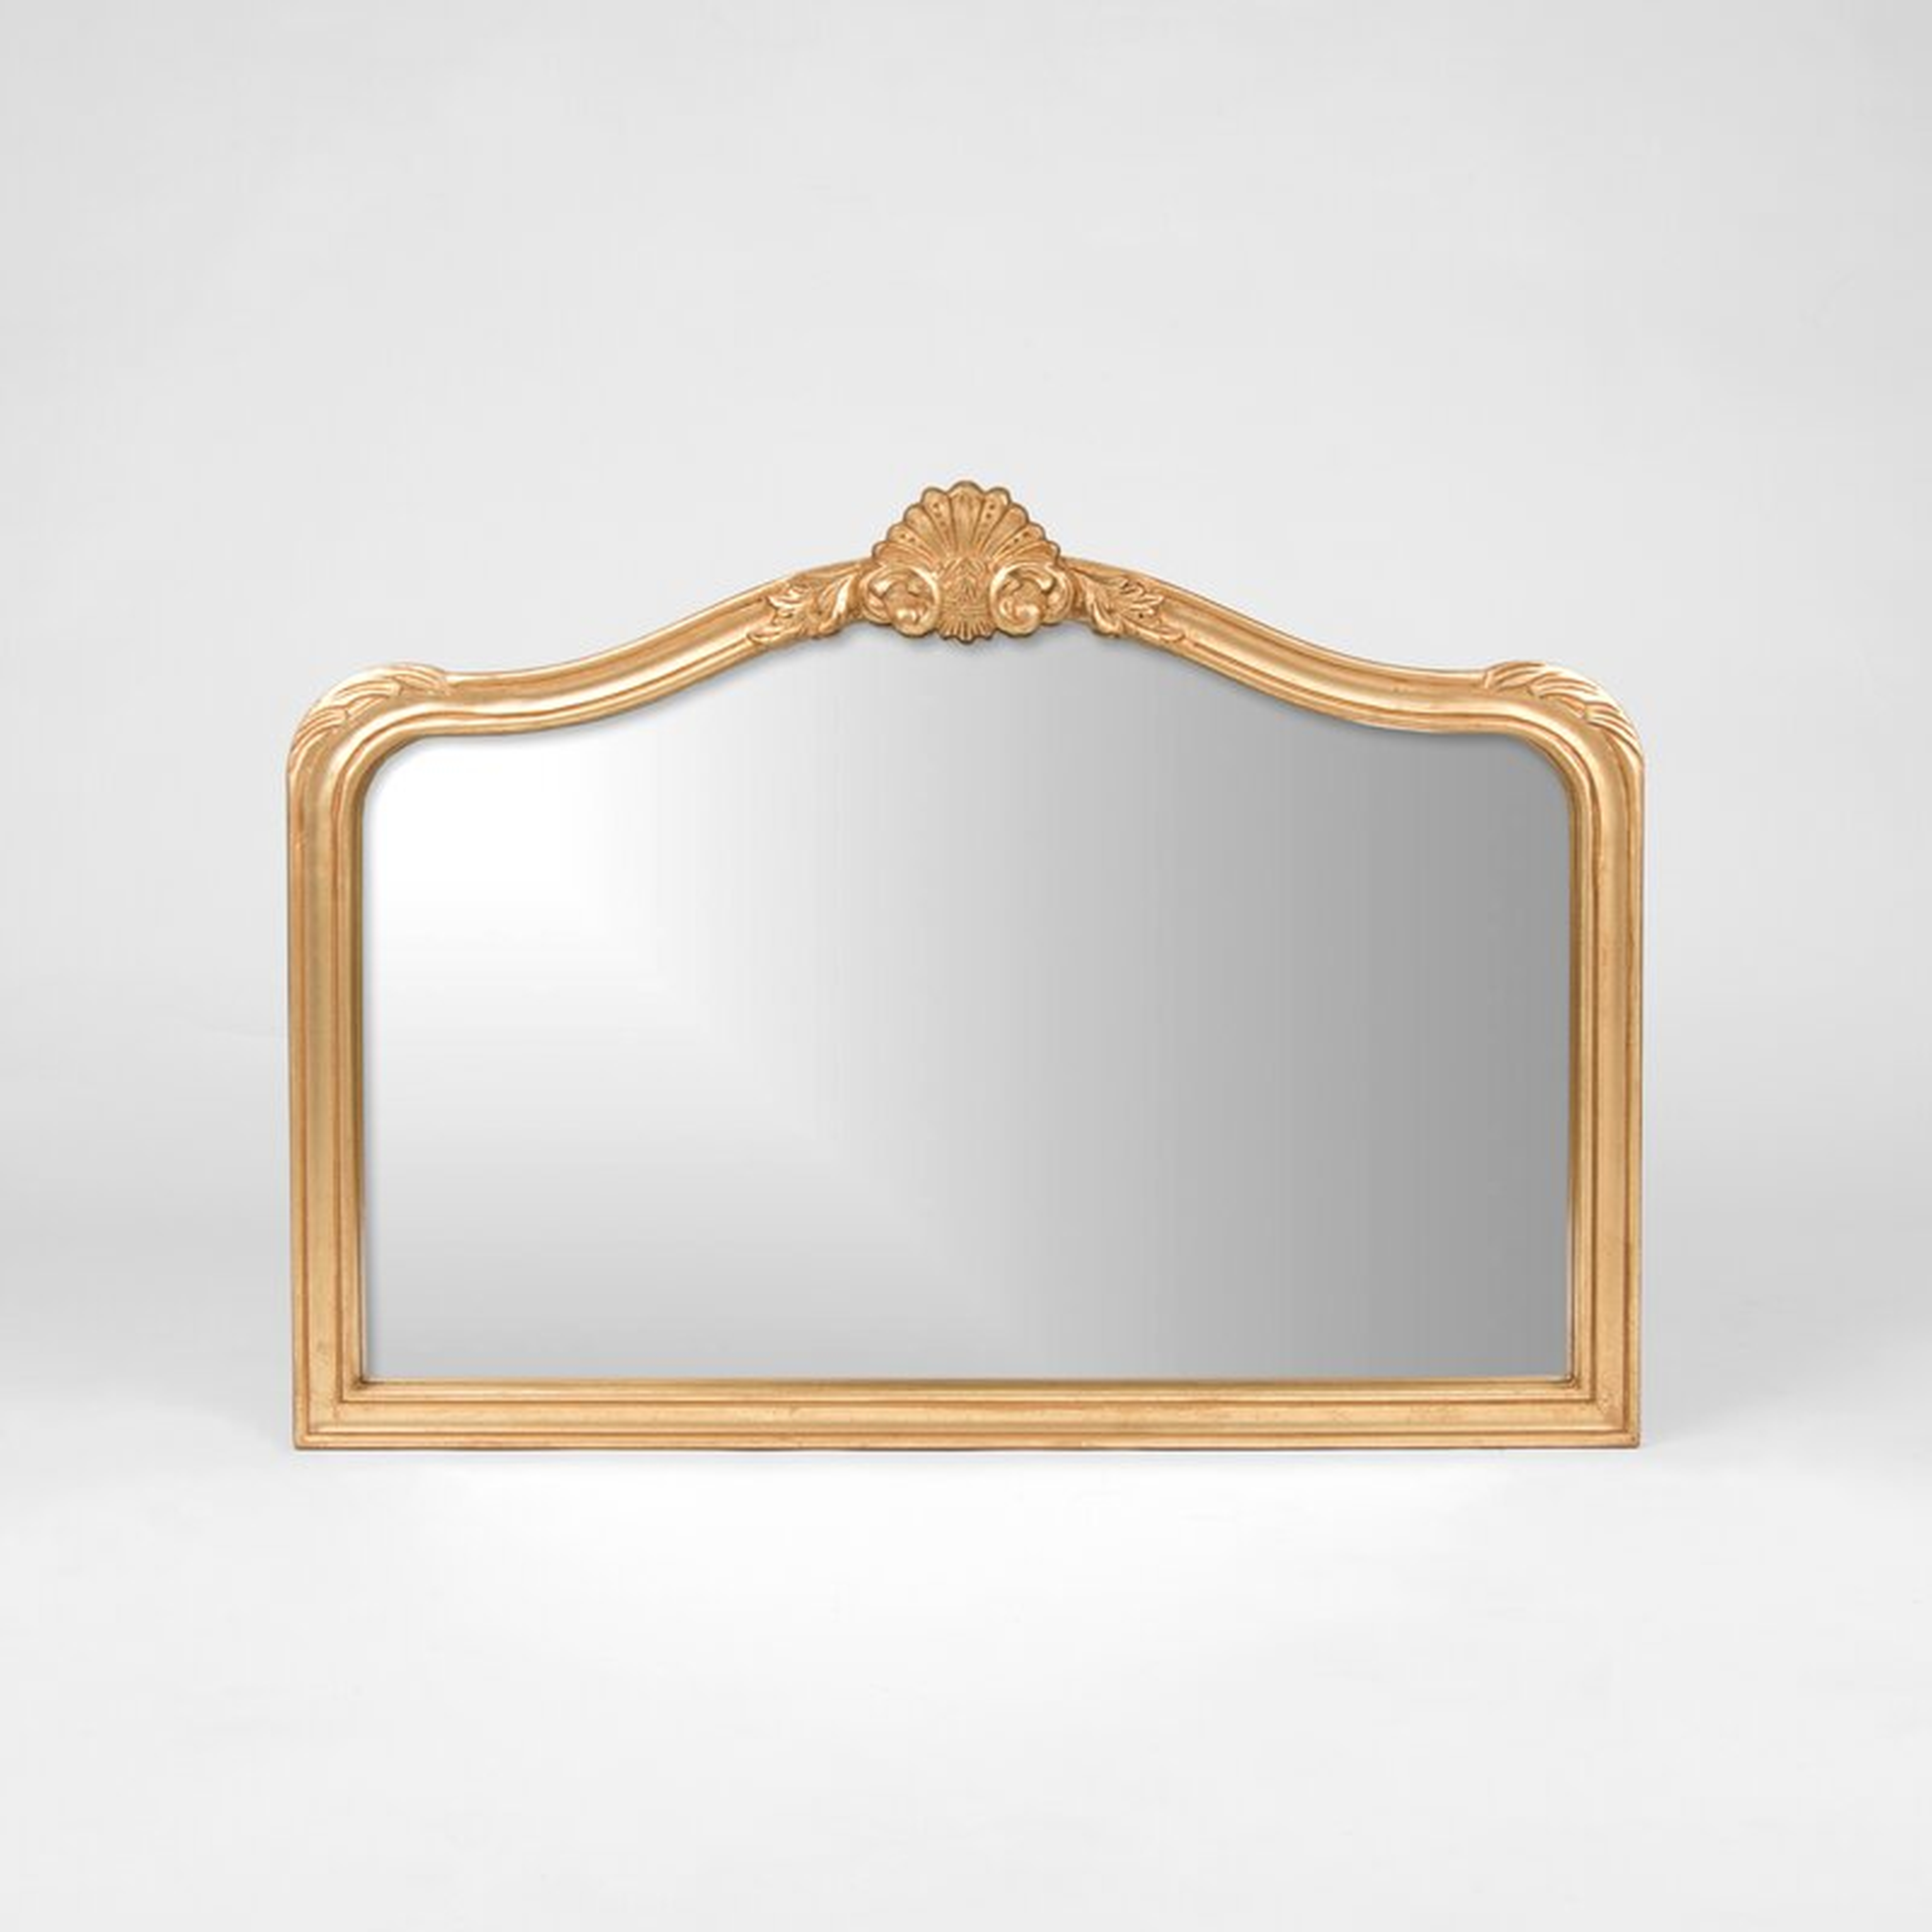 Reith Modern & Contemporary Accent Mirror, Gold - Wayfair